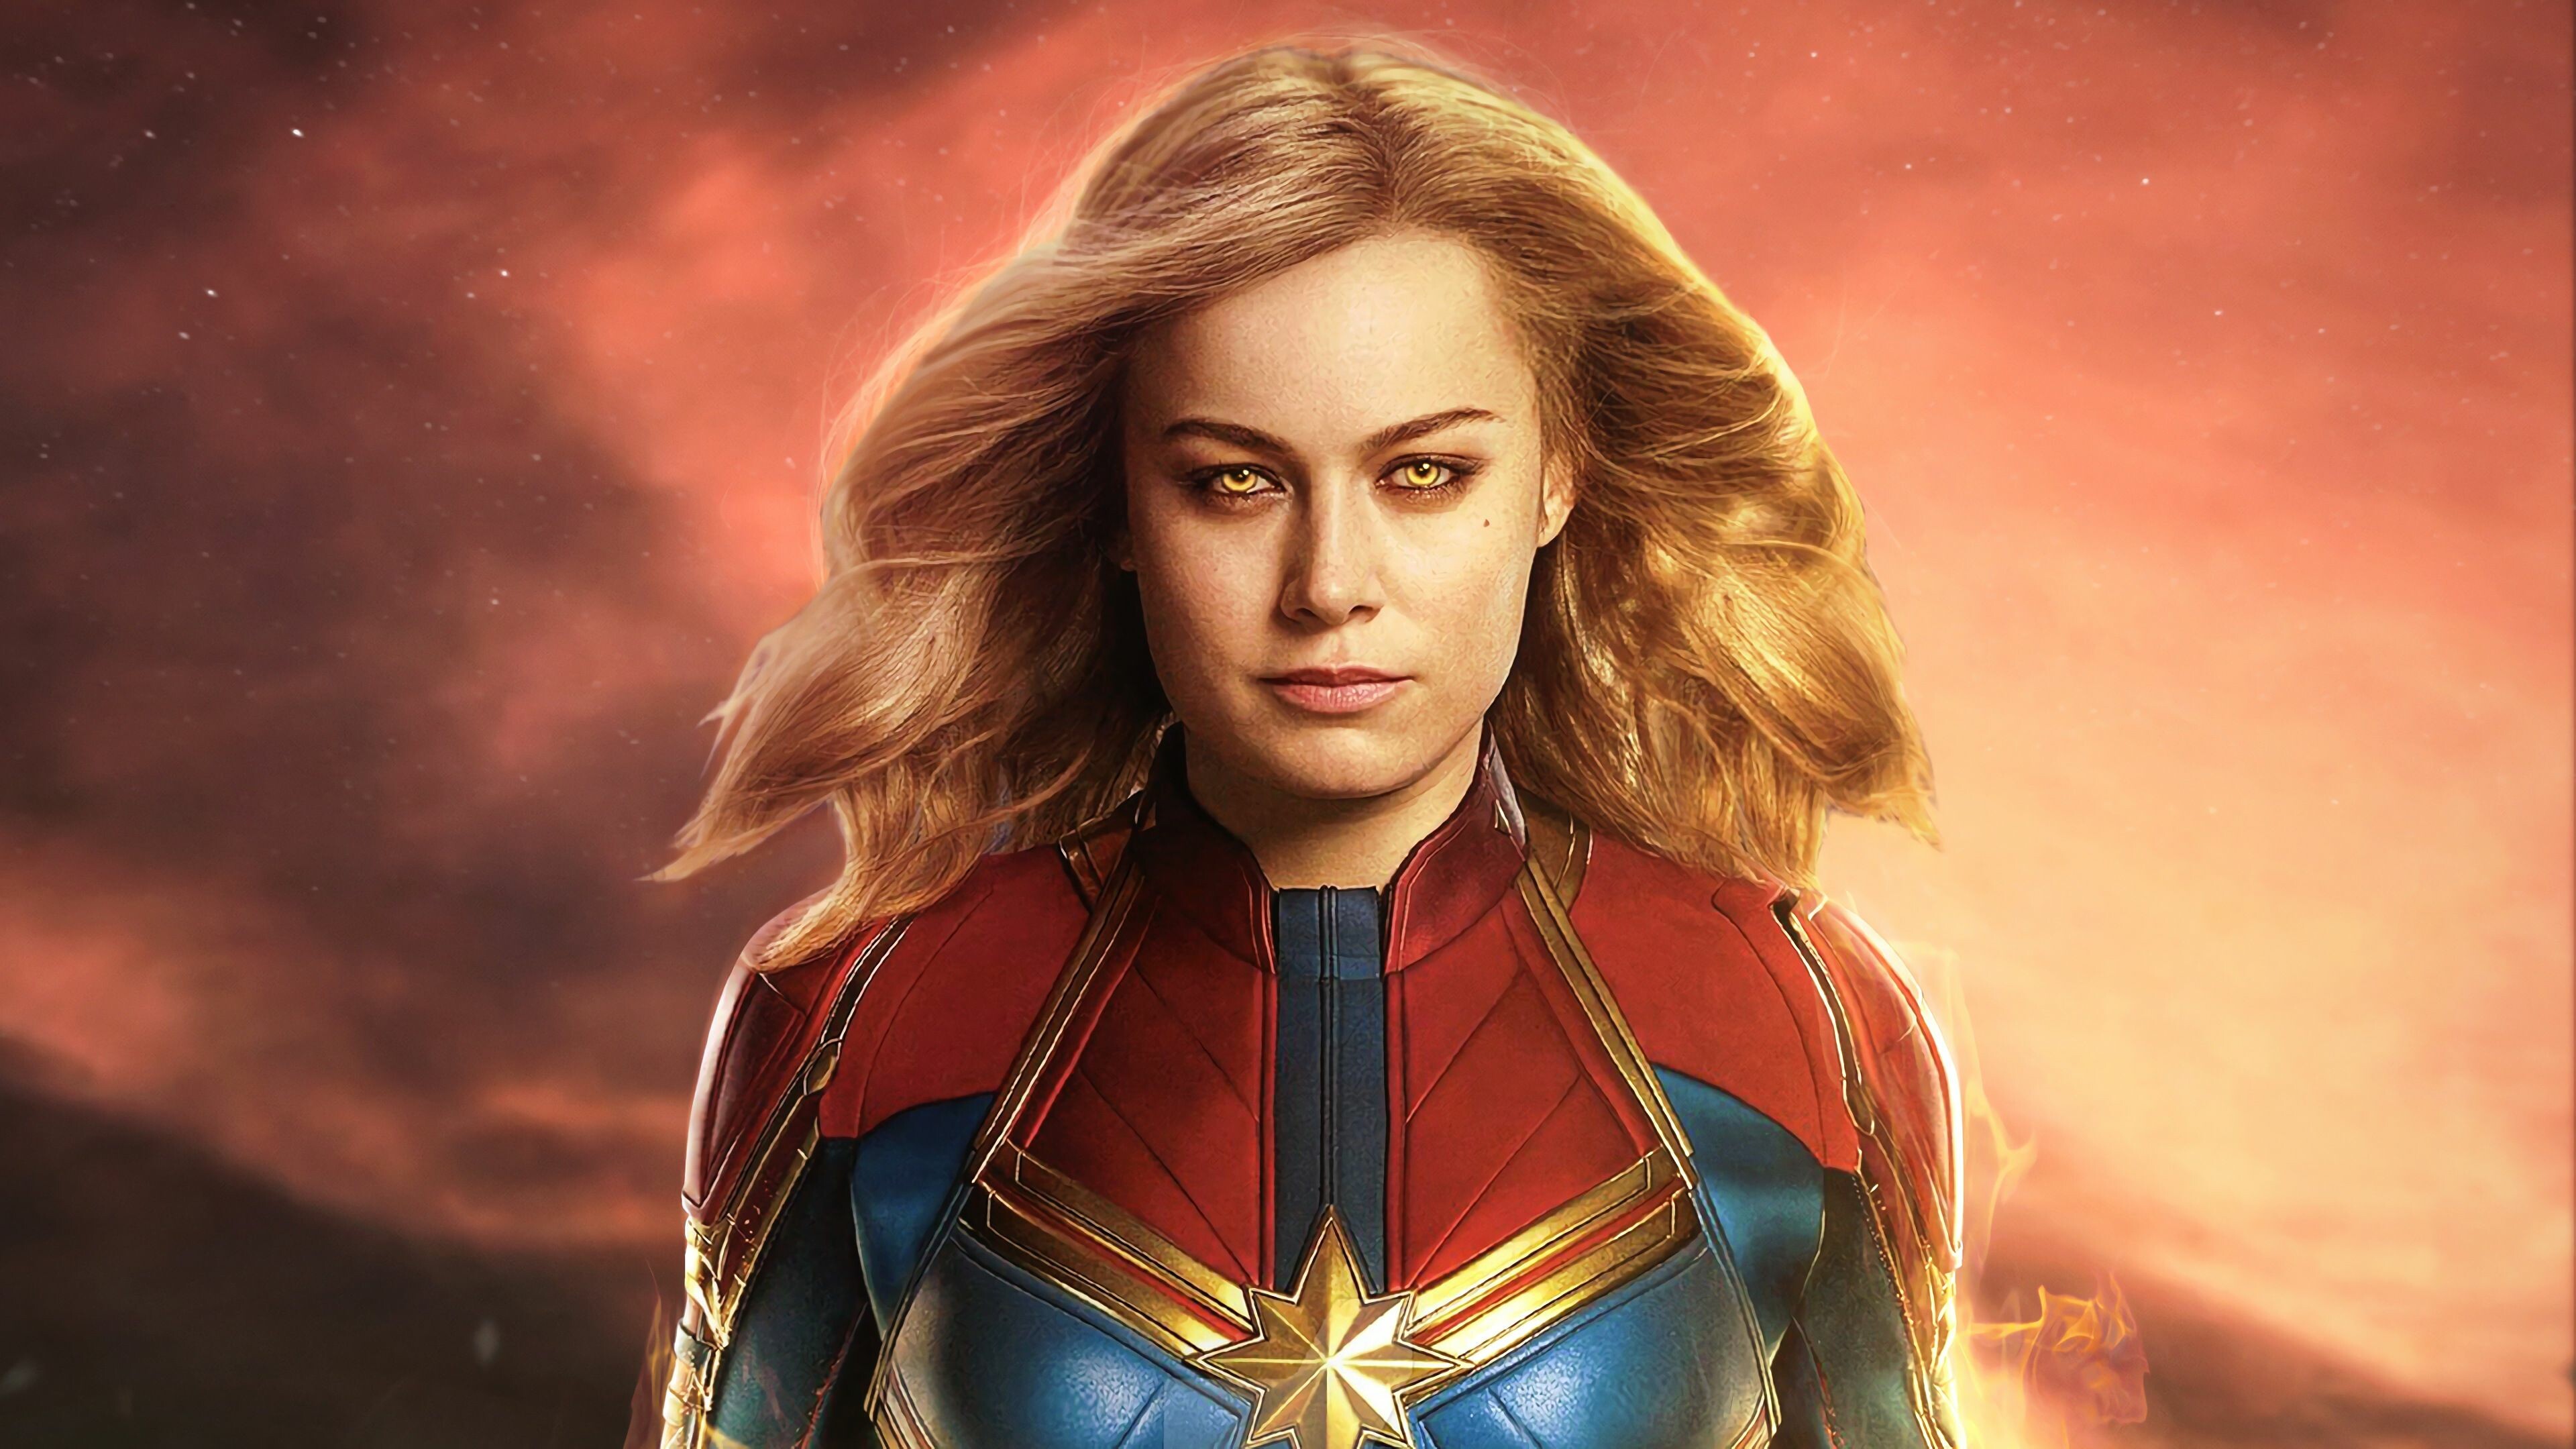 Captain Marvel: Movie 2019, Brie Larson as Carol Danvers, Superhero film. 3840x2160 4K Wallpaper.